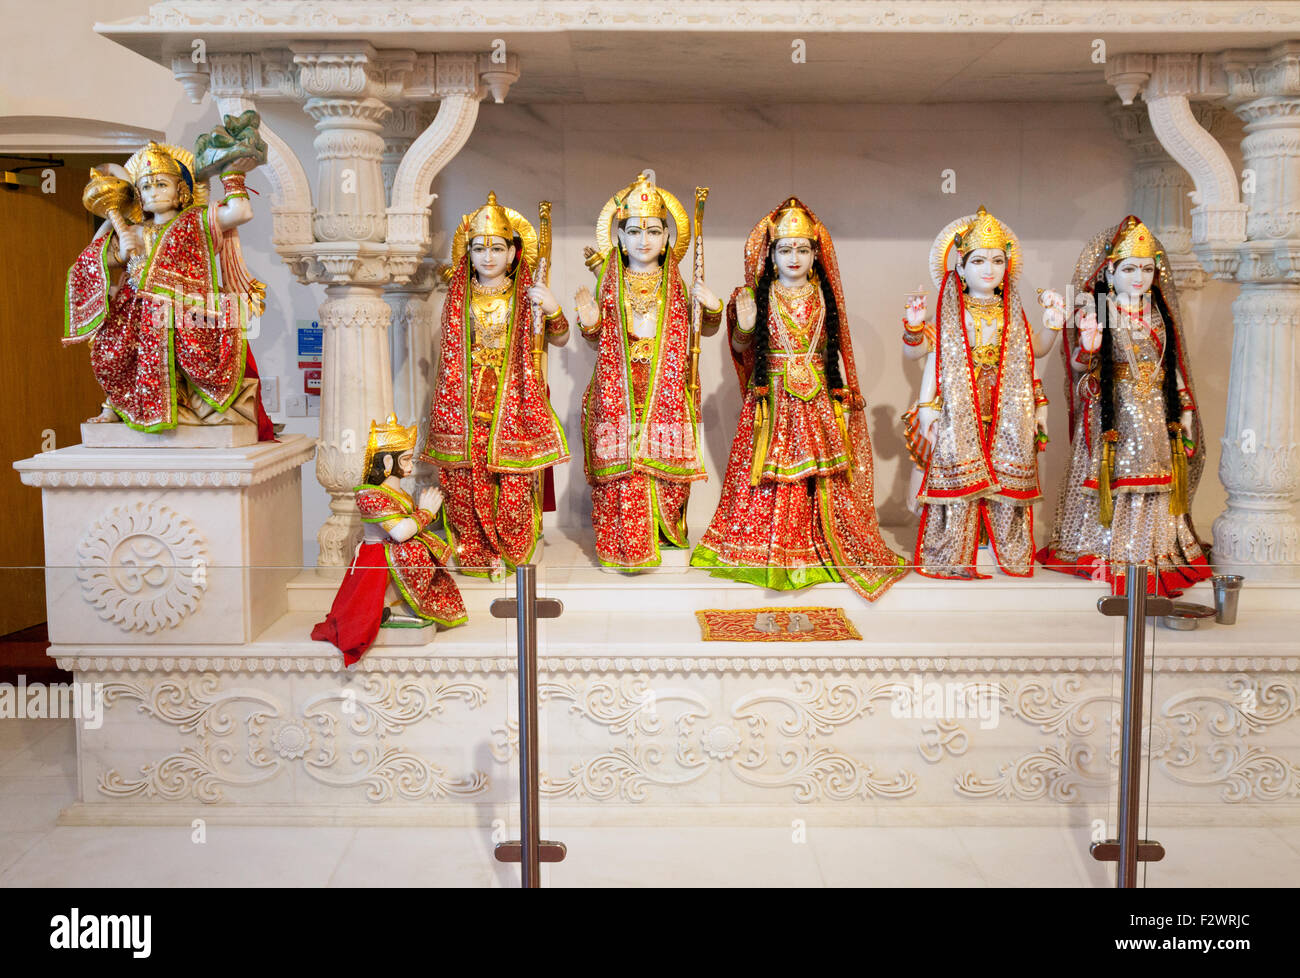 Estatuas de dioses Hindúes en el templo hindú de Lectura, Lectura, Berkshire Inglaterra Foto de stock